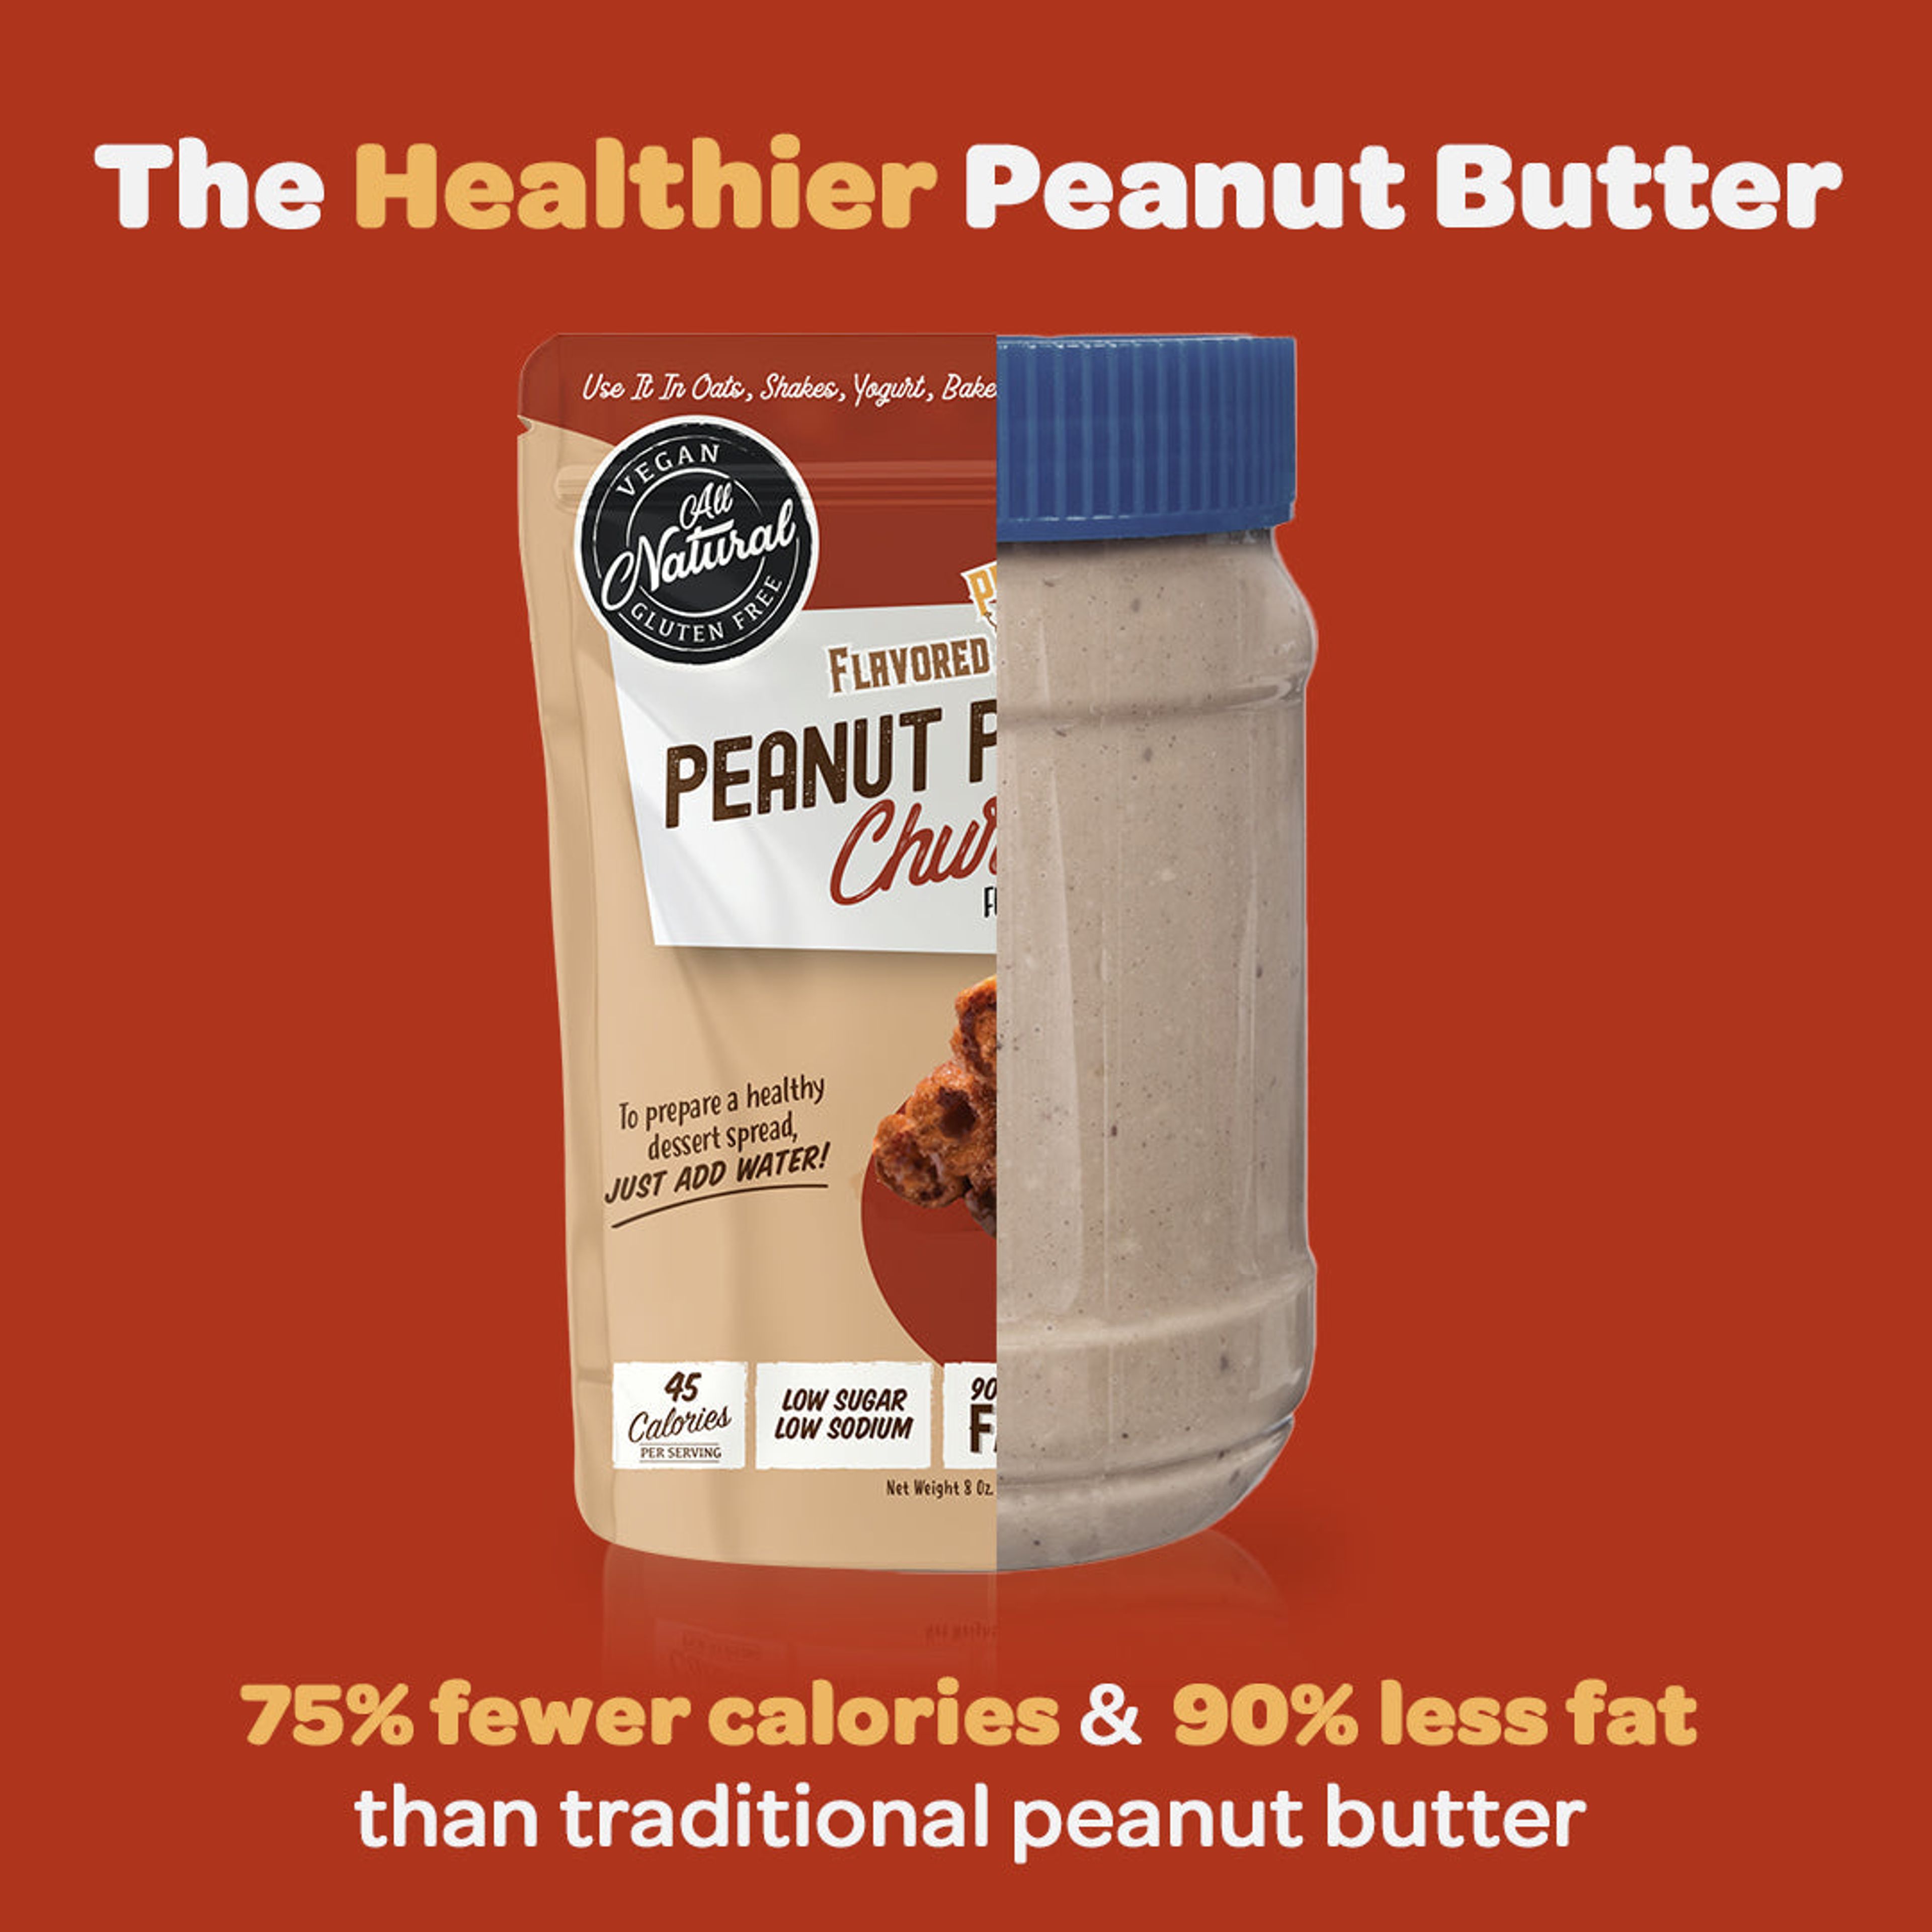 Churro Flavored Peanut Powder (10% Off)